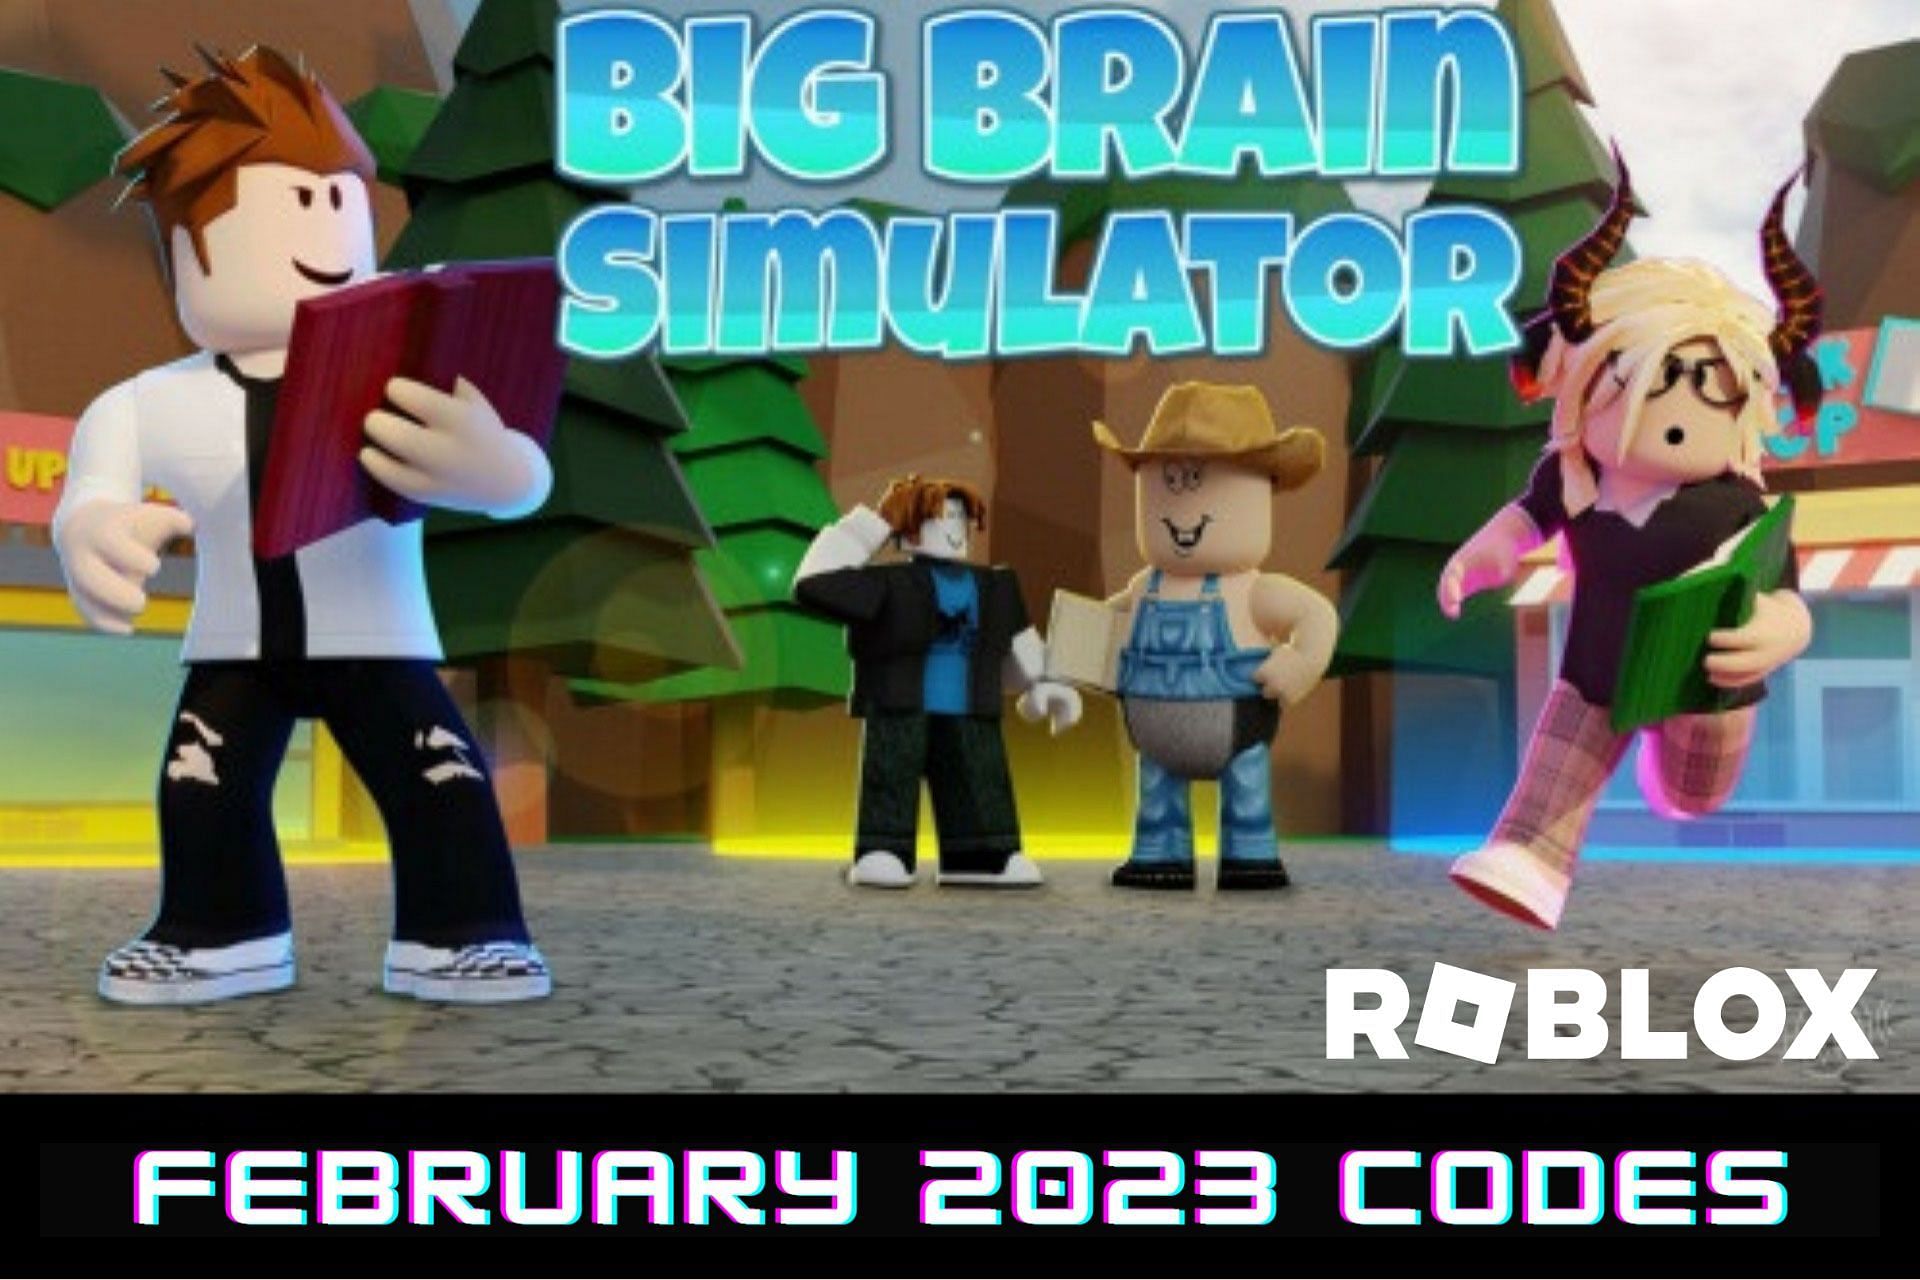 Roblox Big Brain Simulator codes for February 2023: Free coins